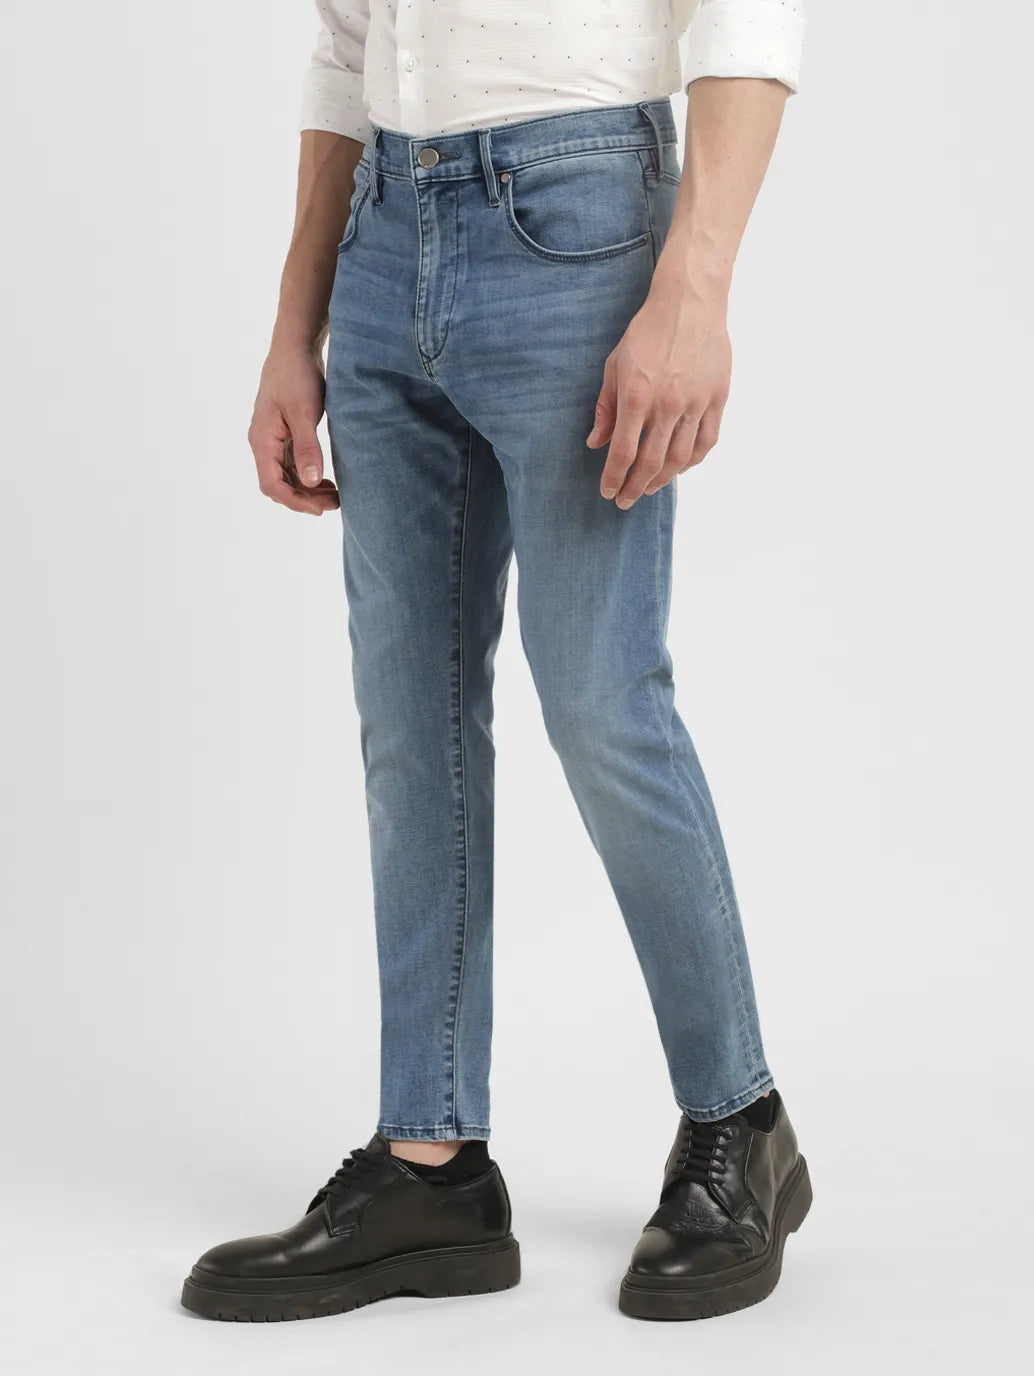 Men's 512 Light Indigo Slim Tapered Fit Jeans